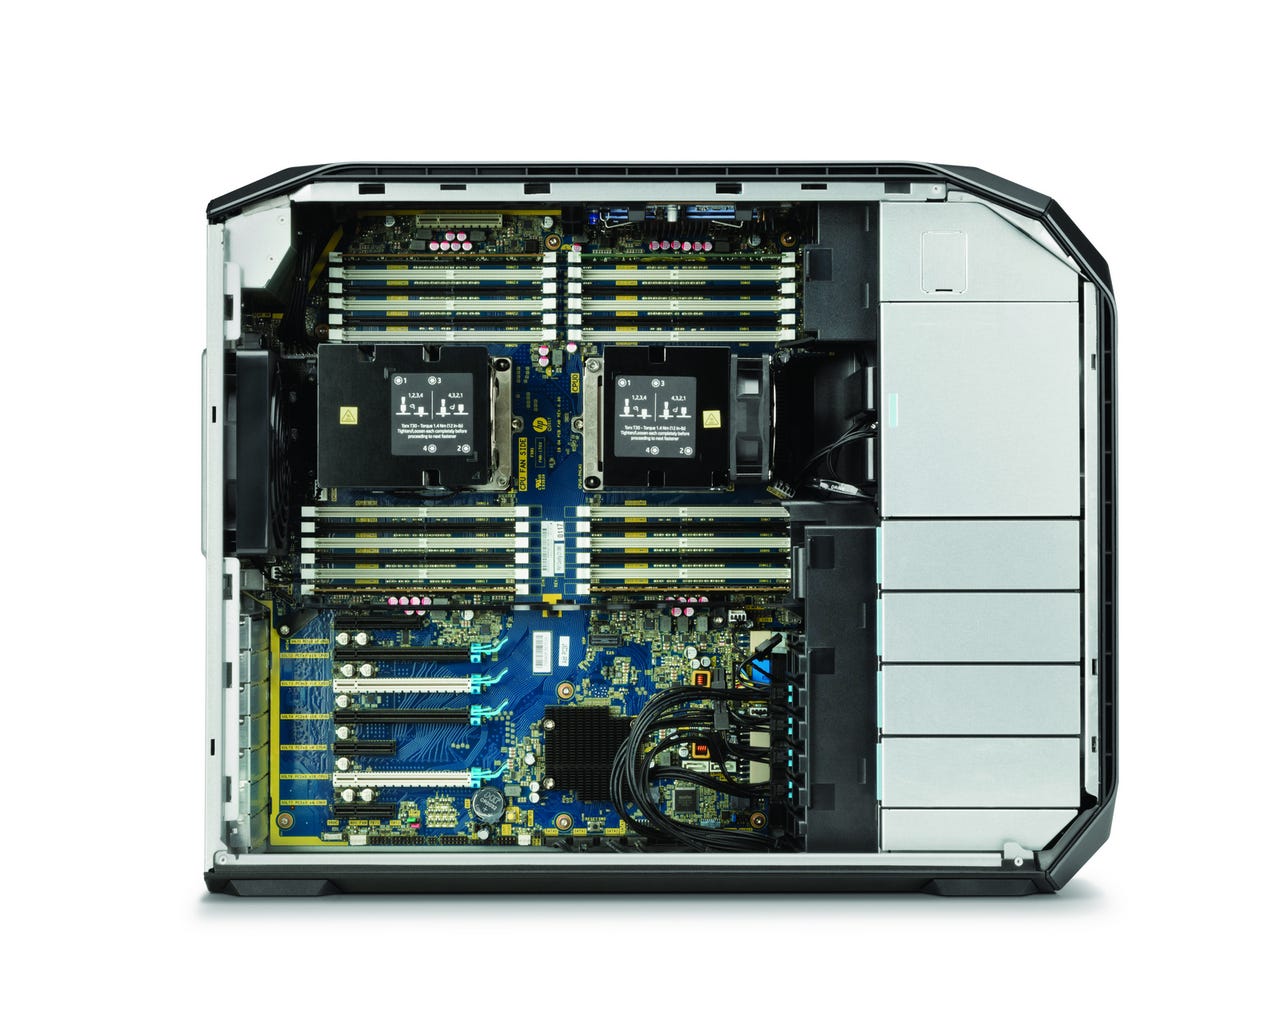 Inside the HP Z8